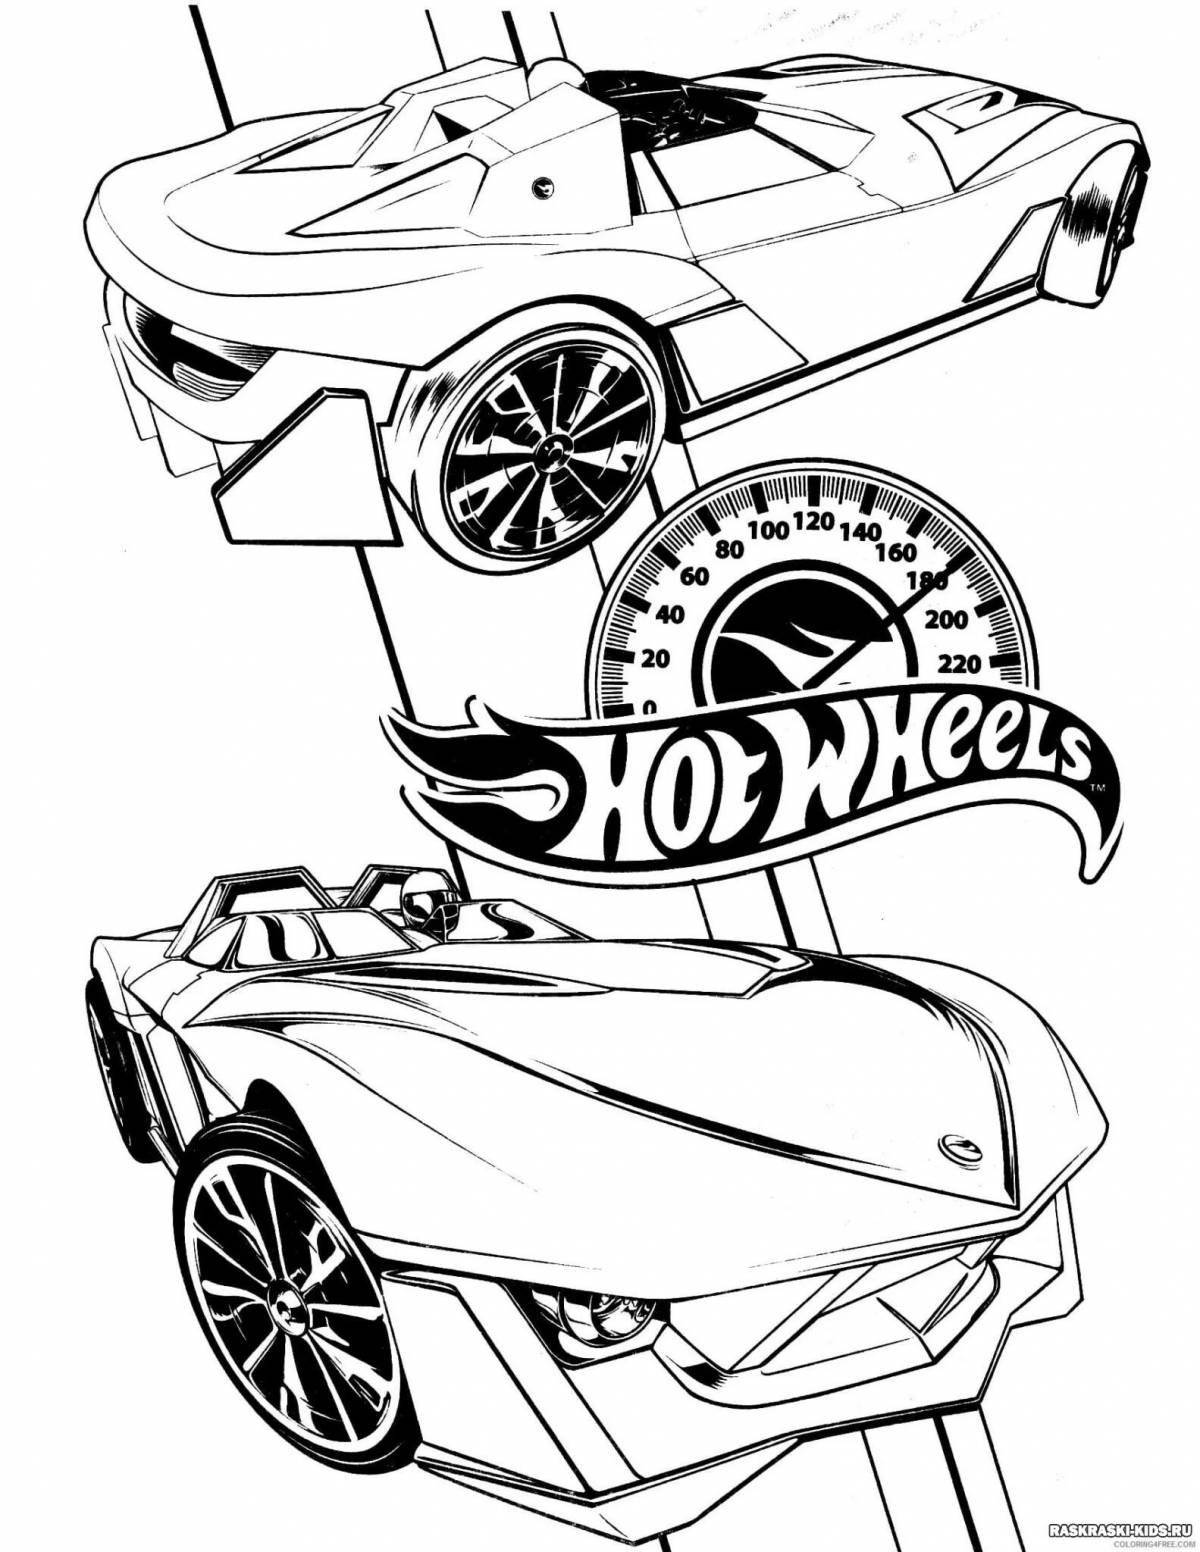 Grand hot wheels racing car